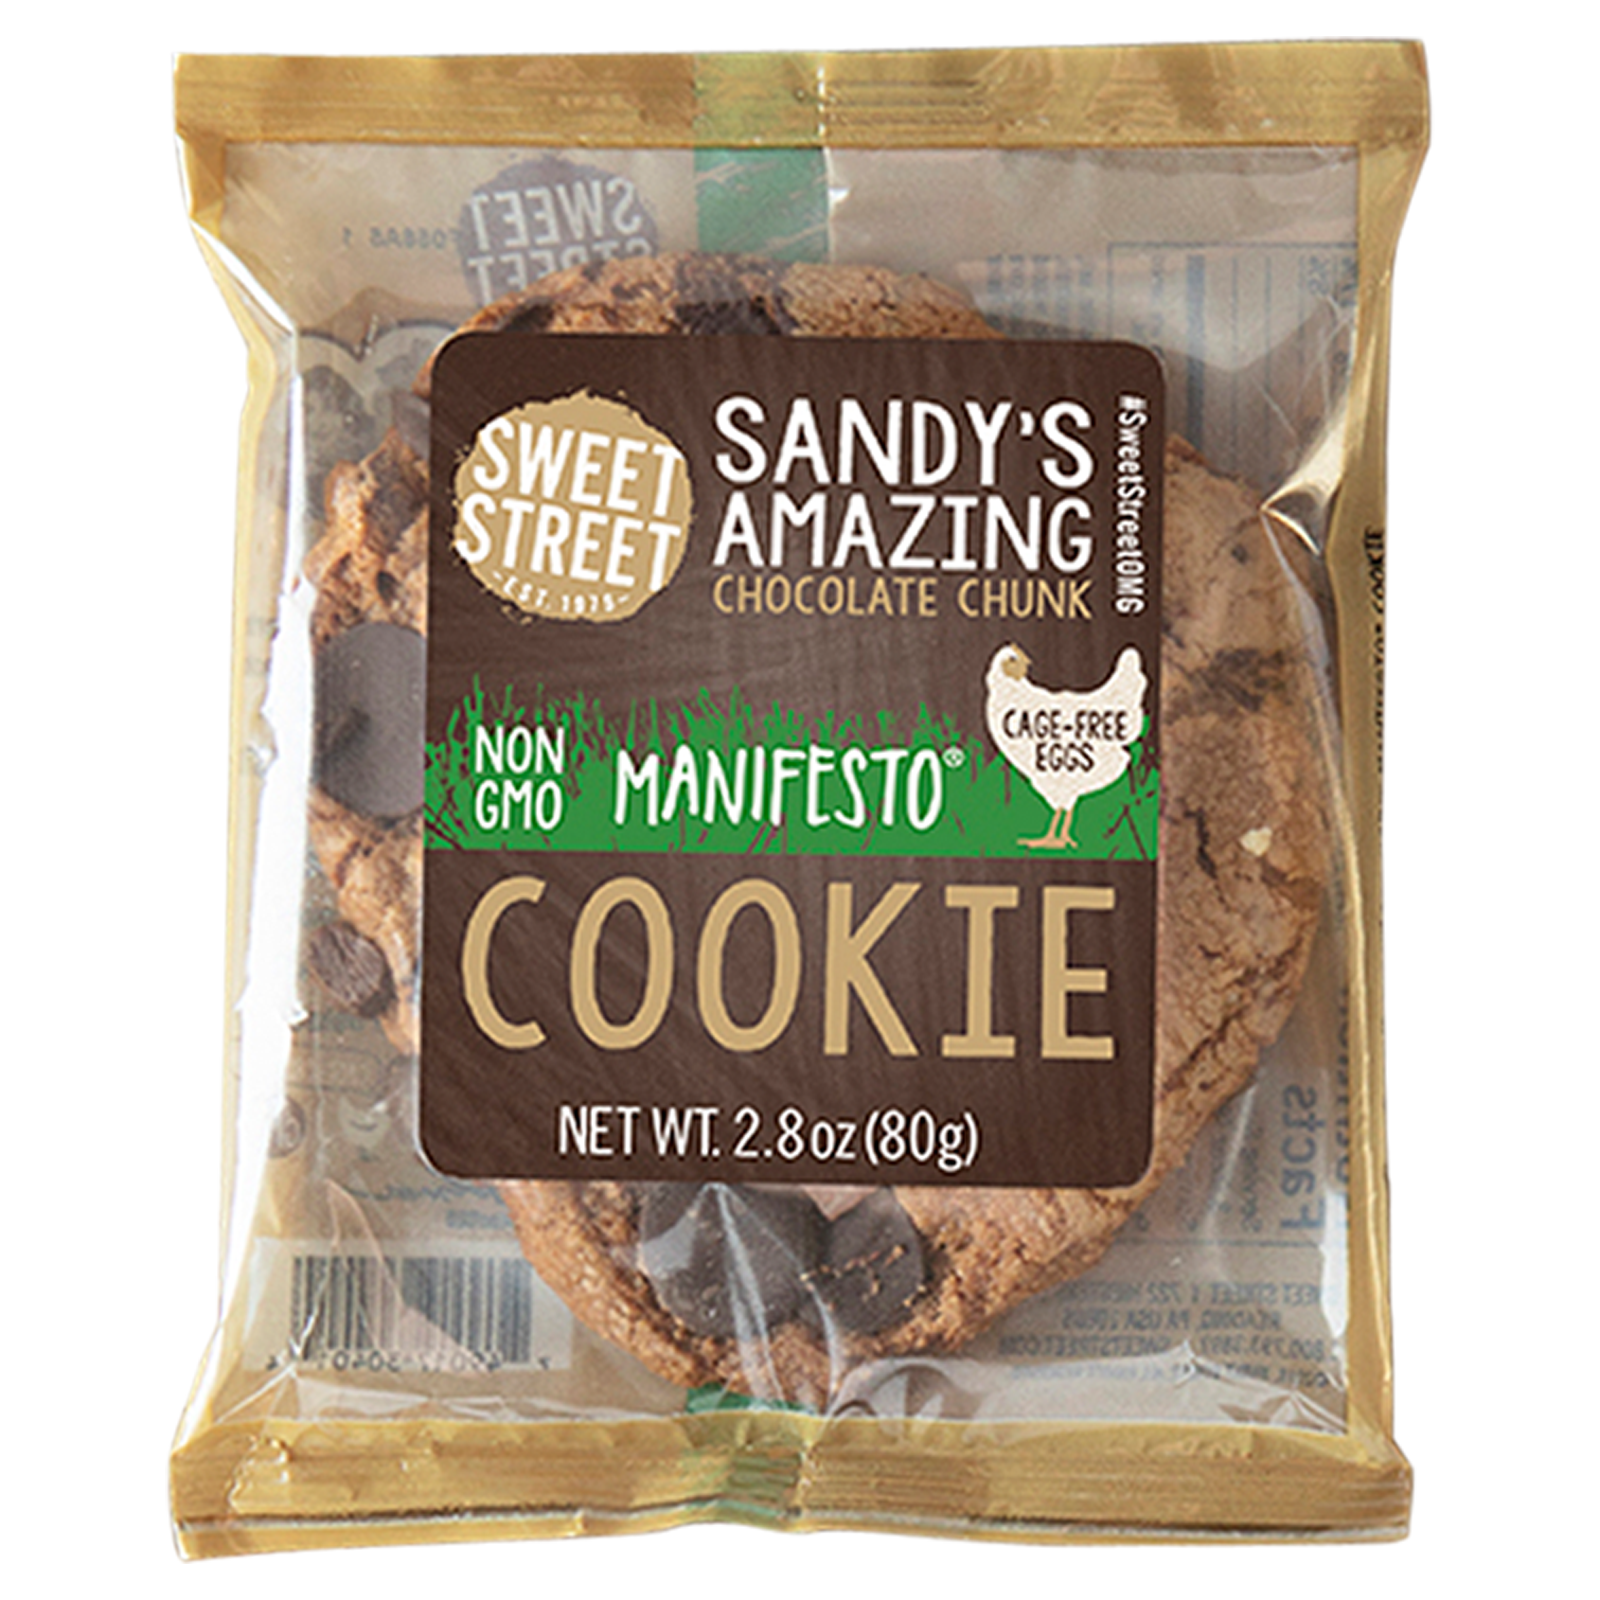 Sweet Street Sandy's Amazing Chocolate Chunk Manifesto Cookie 2.8oz